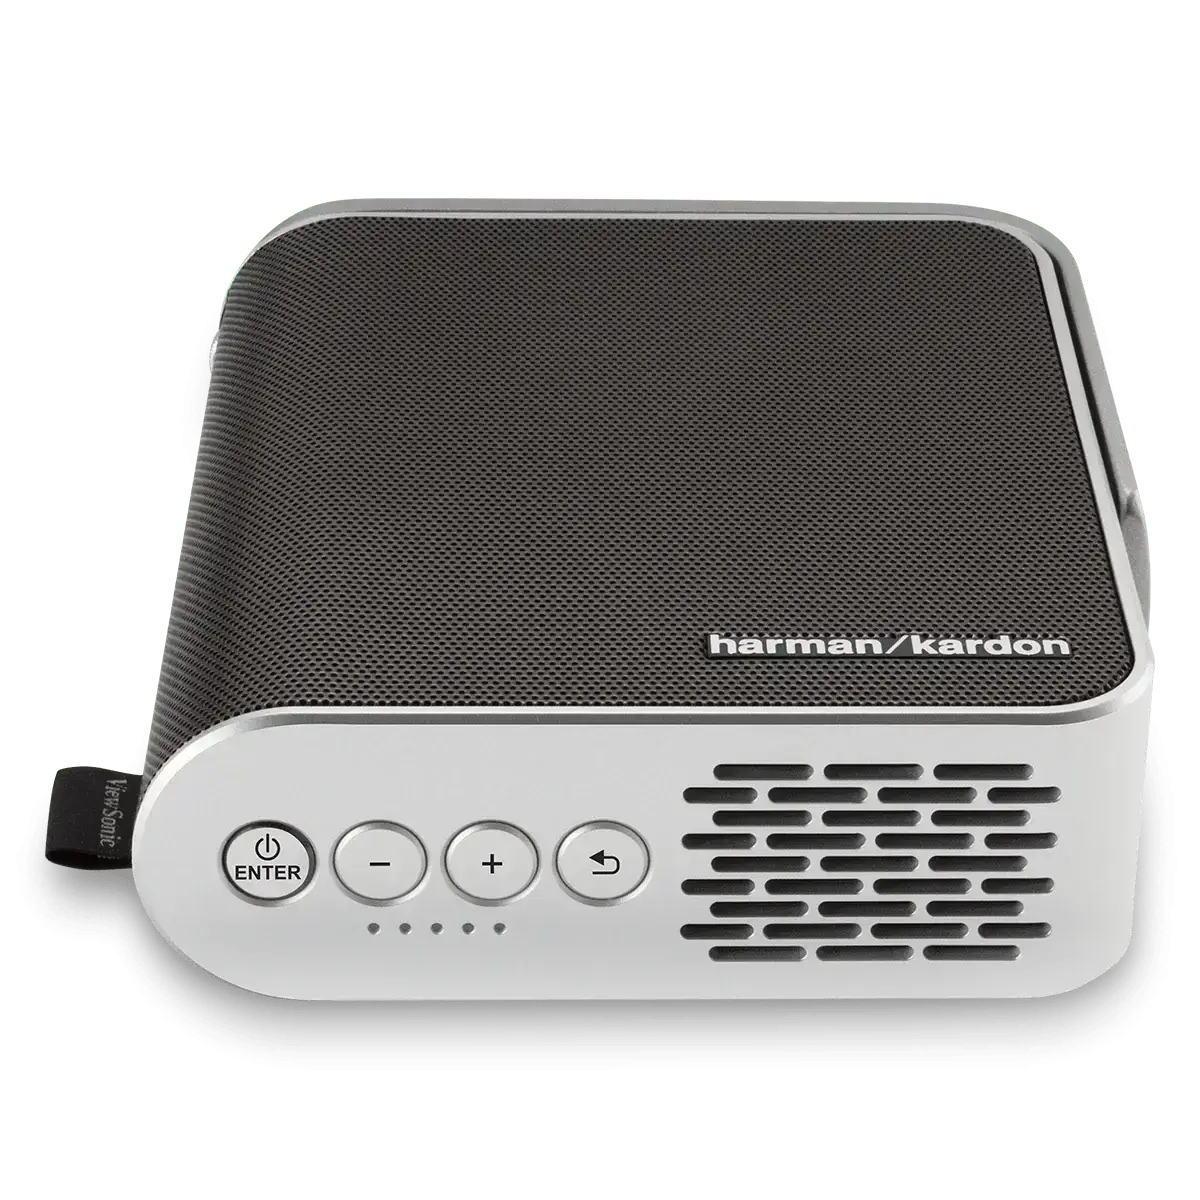 M1+Mini Portable LED Projector with Harman Kardon Bluetooth Speakers, USB C, Wi-Fi